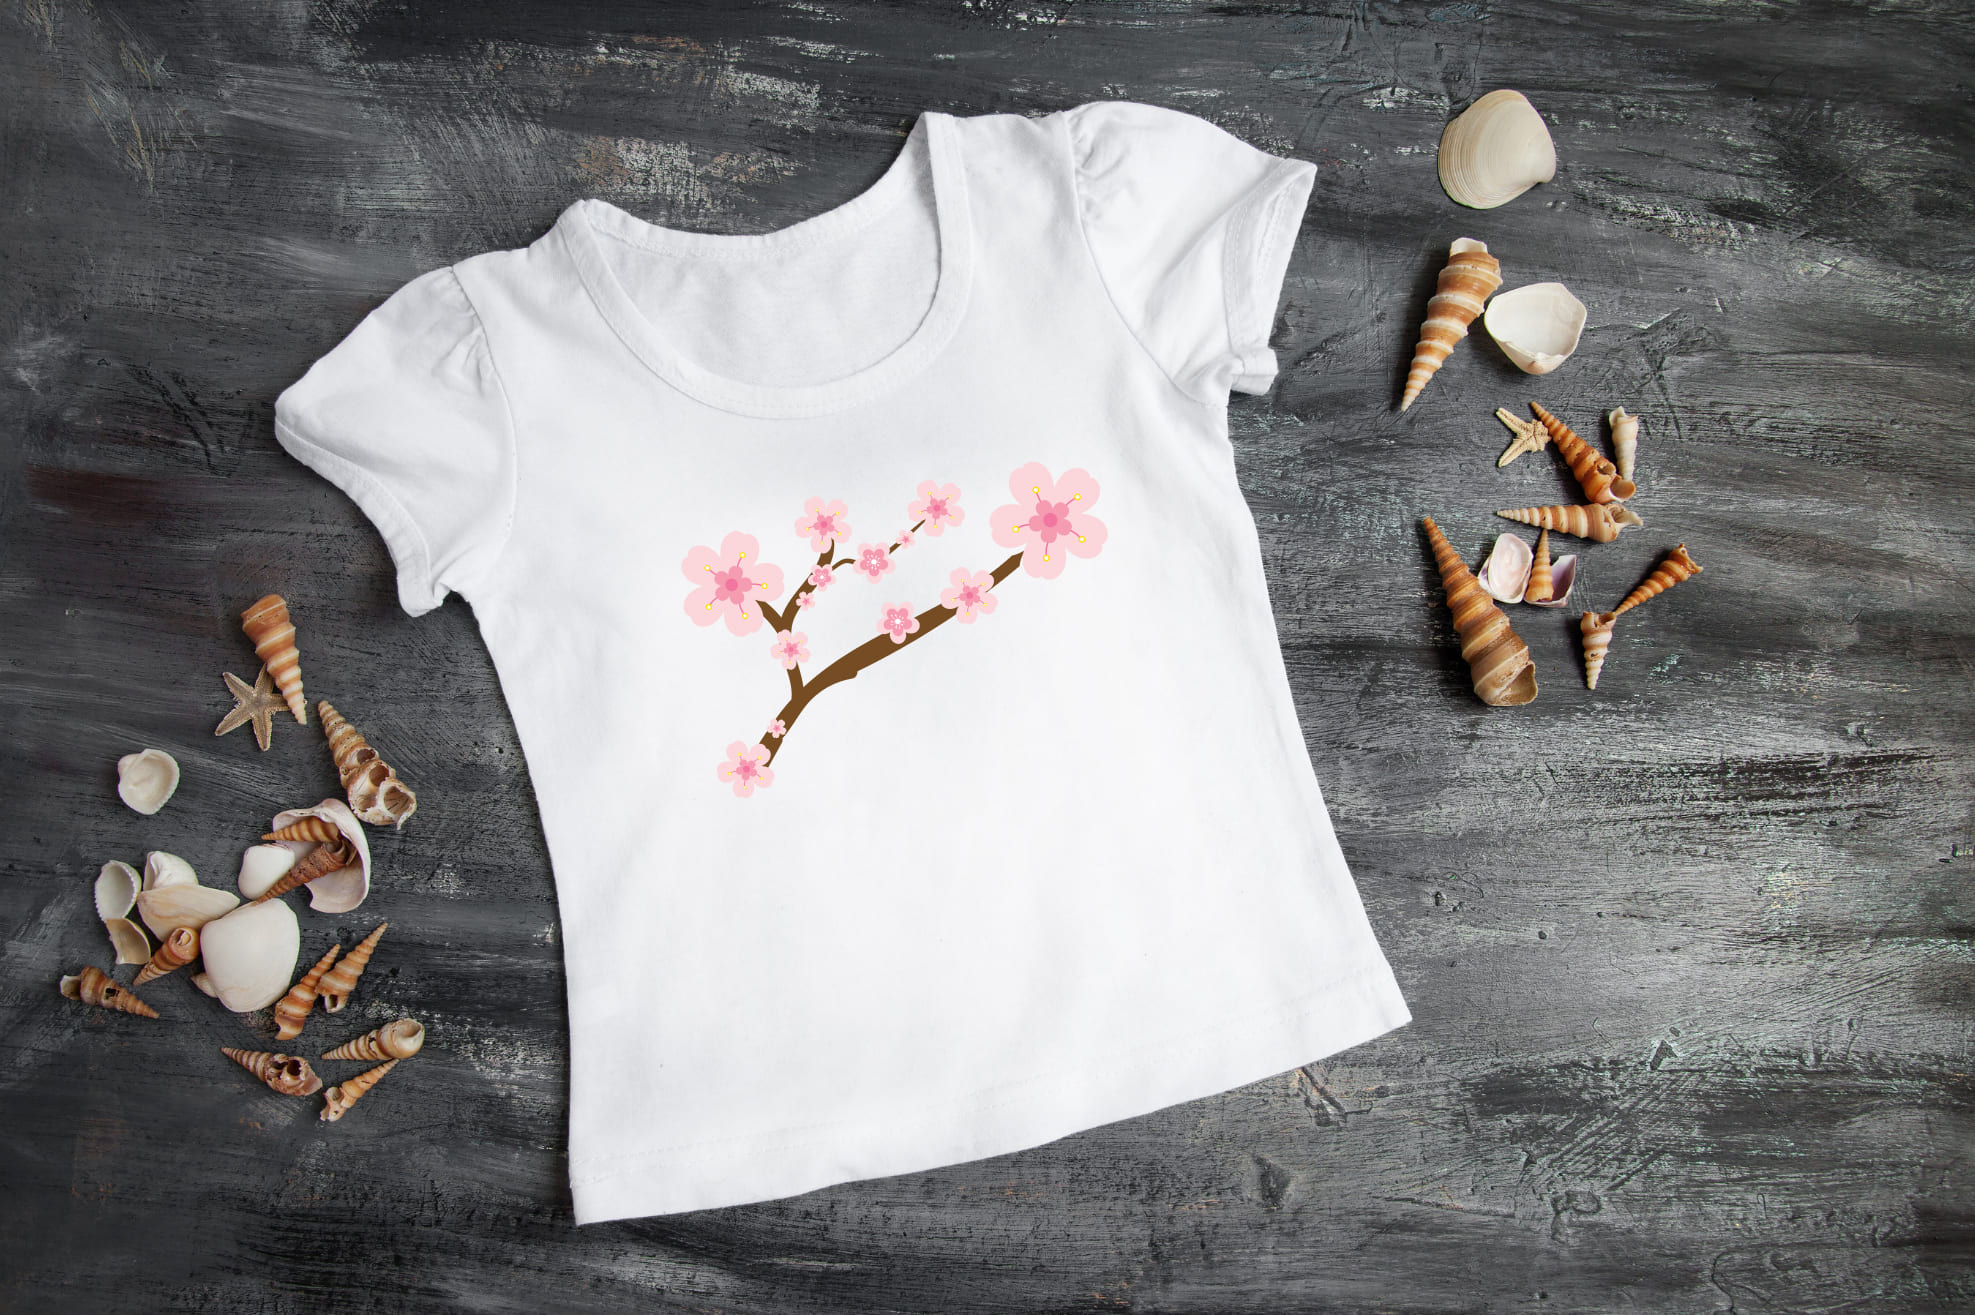 cherry blossom jersey design